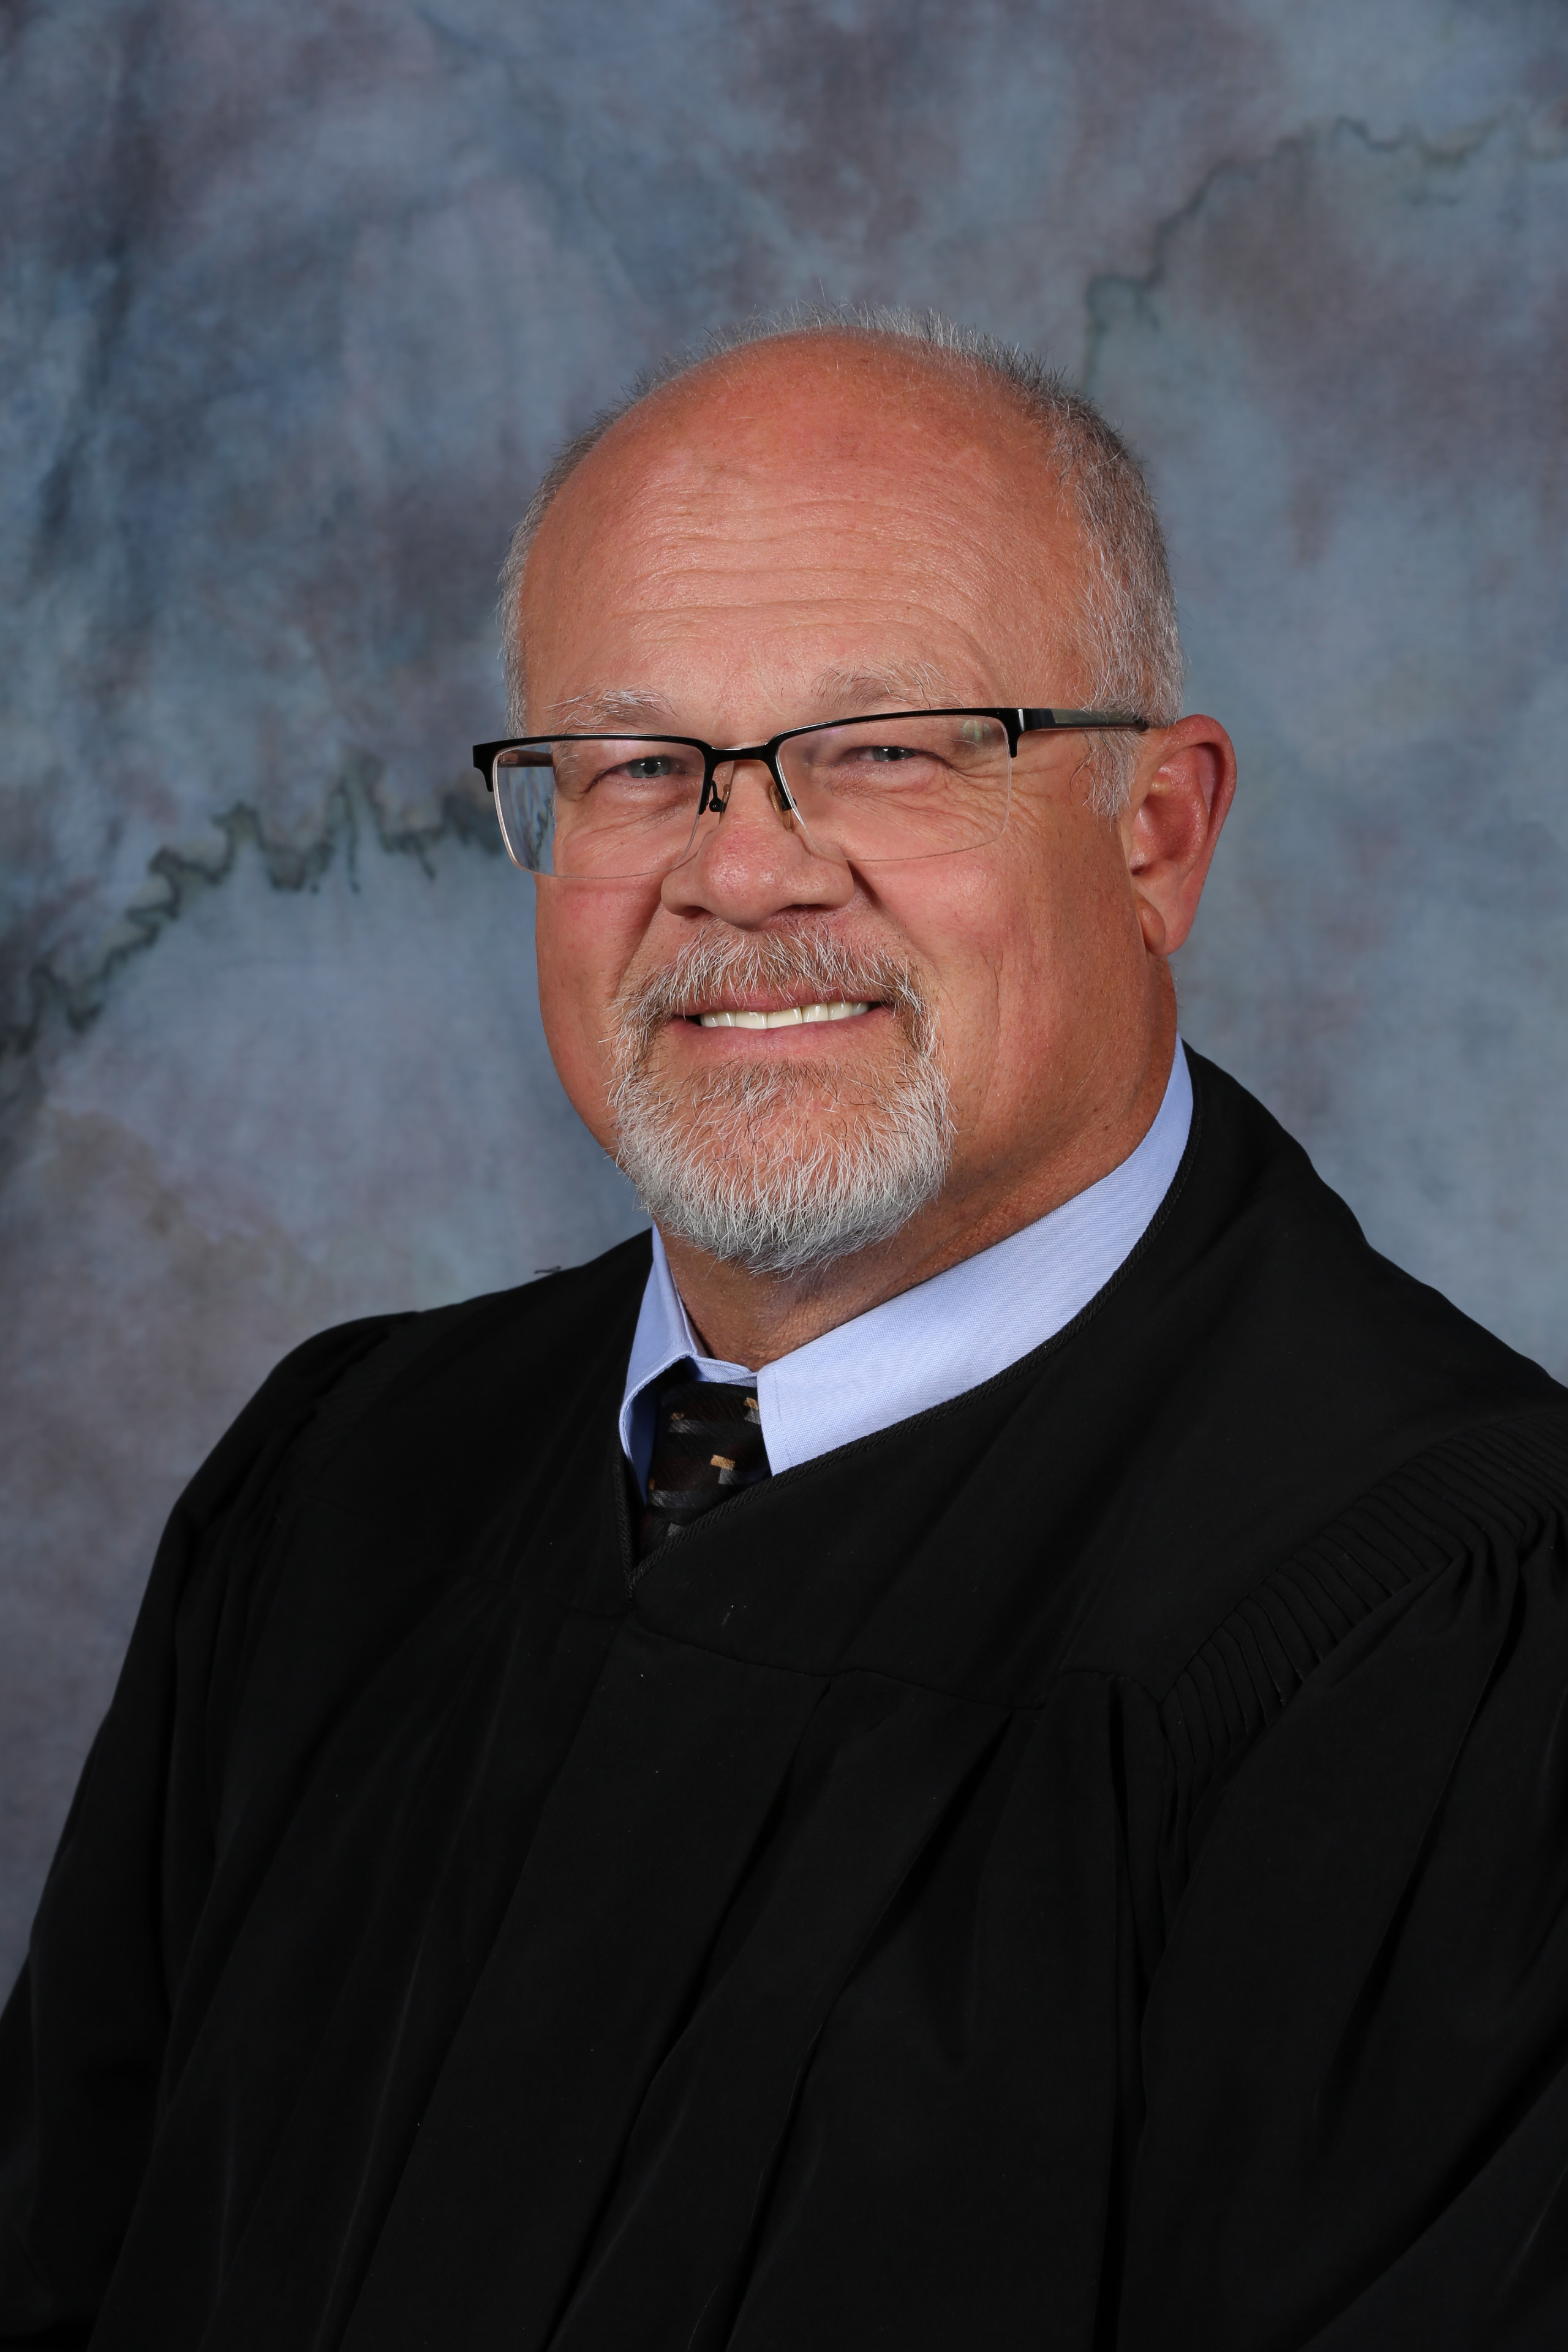 JUDGE RANDY B. BIRCH